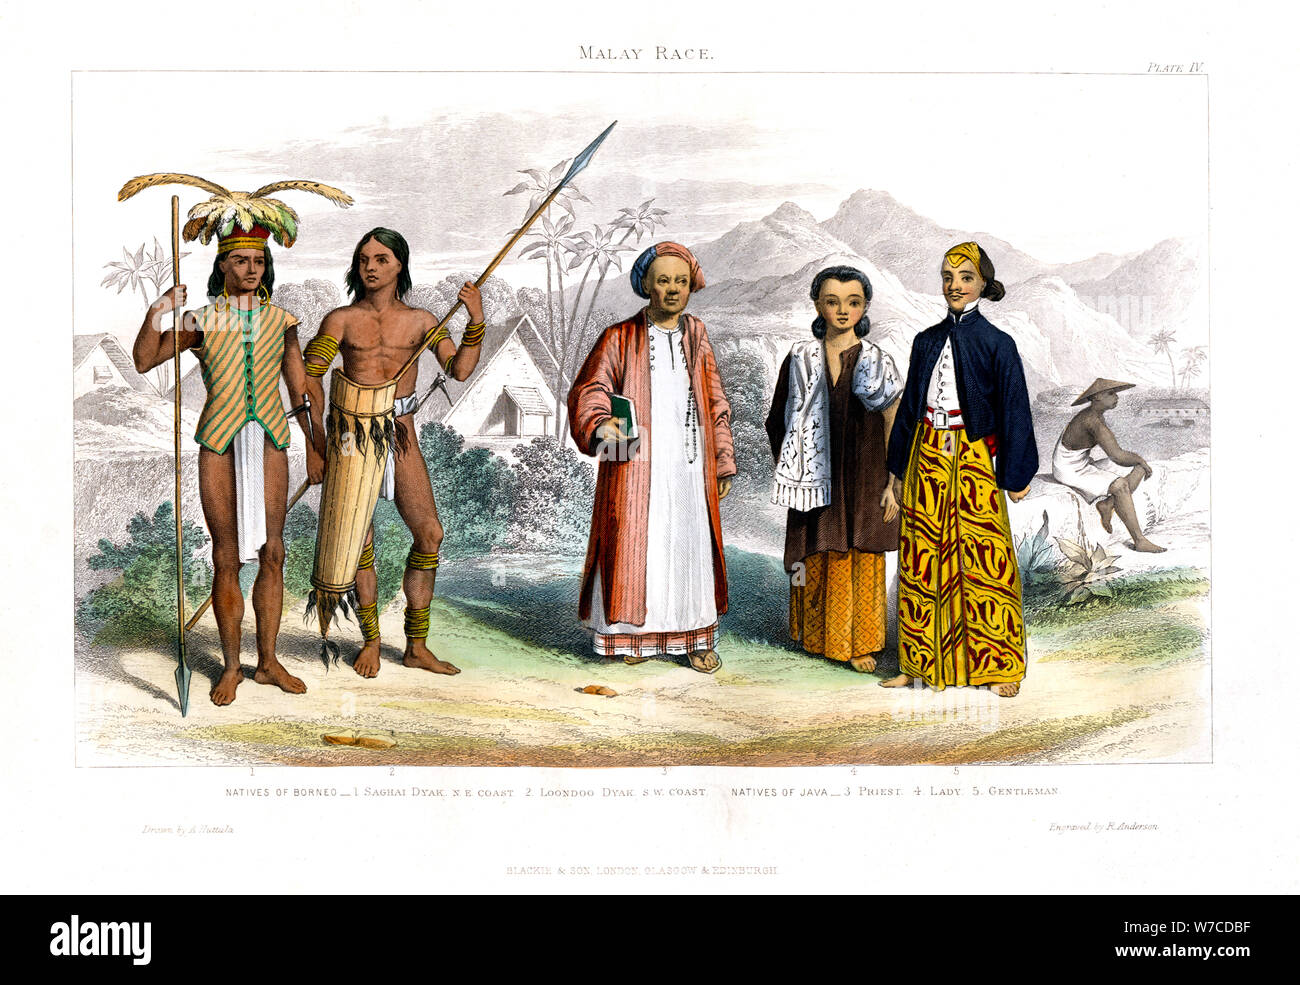 'Malay Race', 1800-1900.Artist: R Anderson Stock Photo